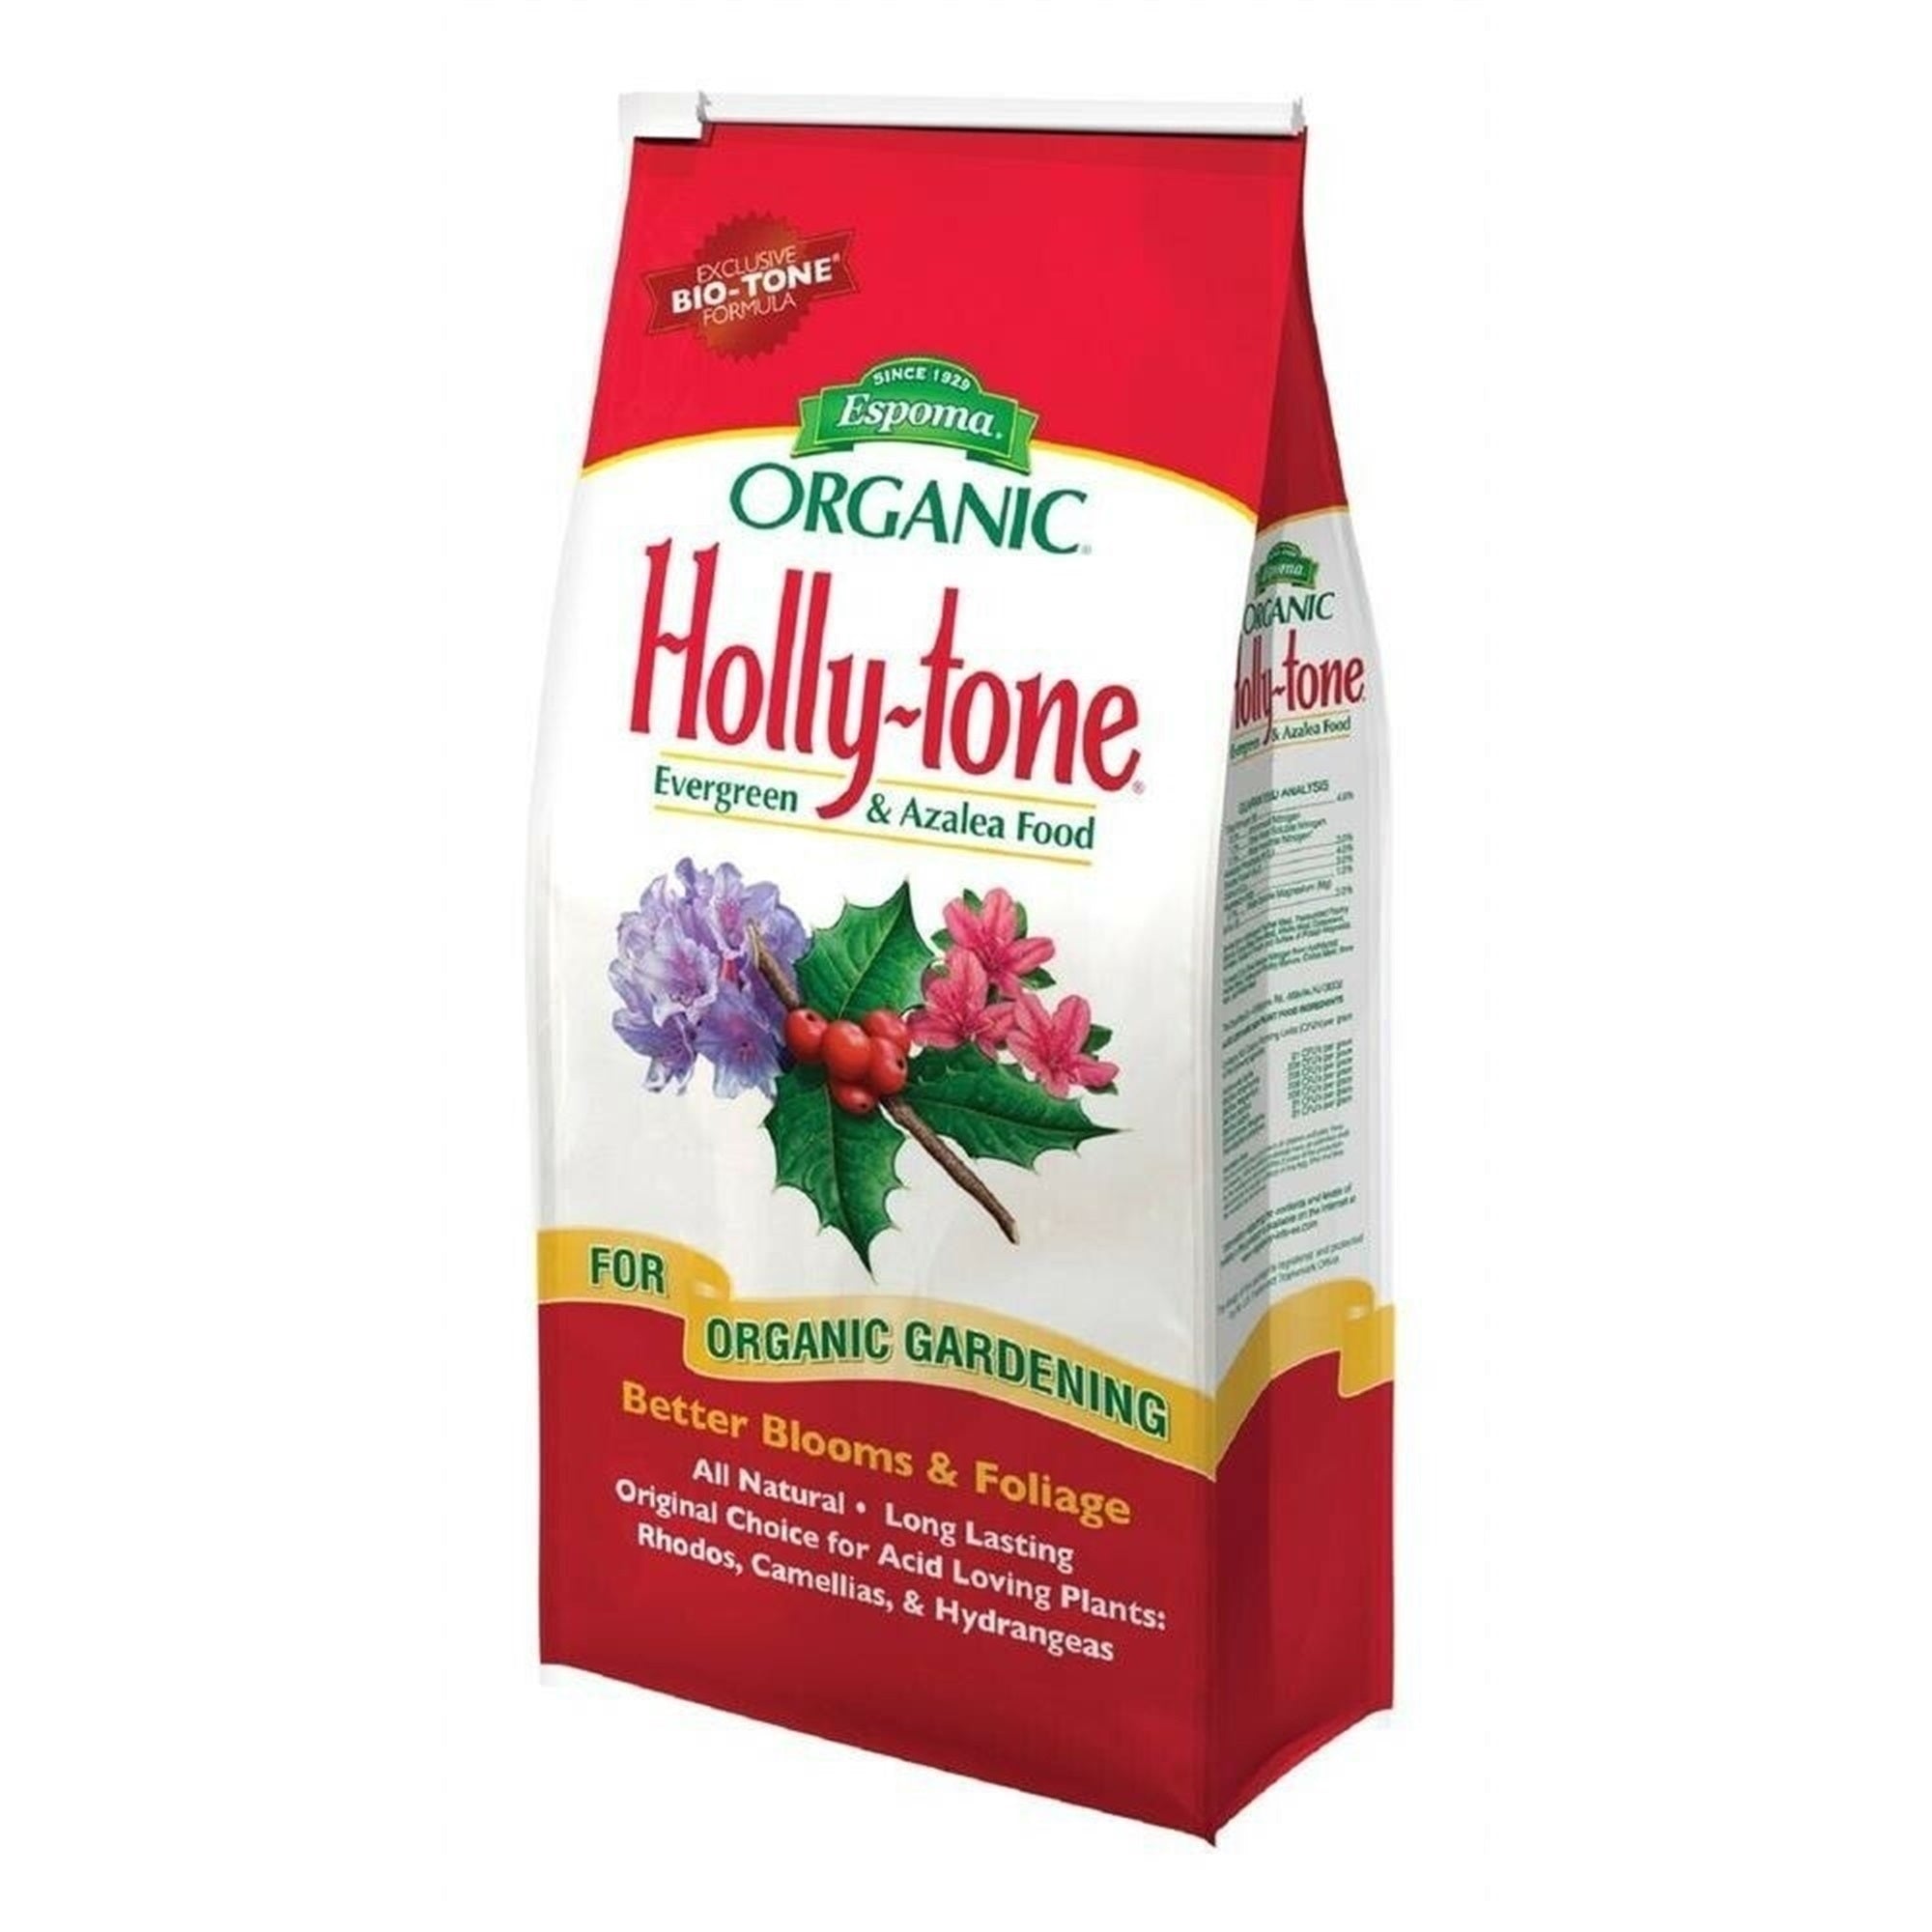 Espoma Organic Holly-tone 4-3-4 Natural & Organic Evergreen & Azalea Plant Food for All Acid Loving Plants